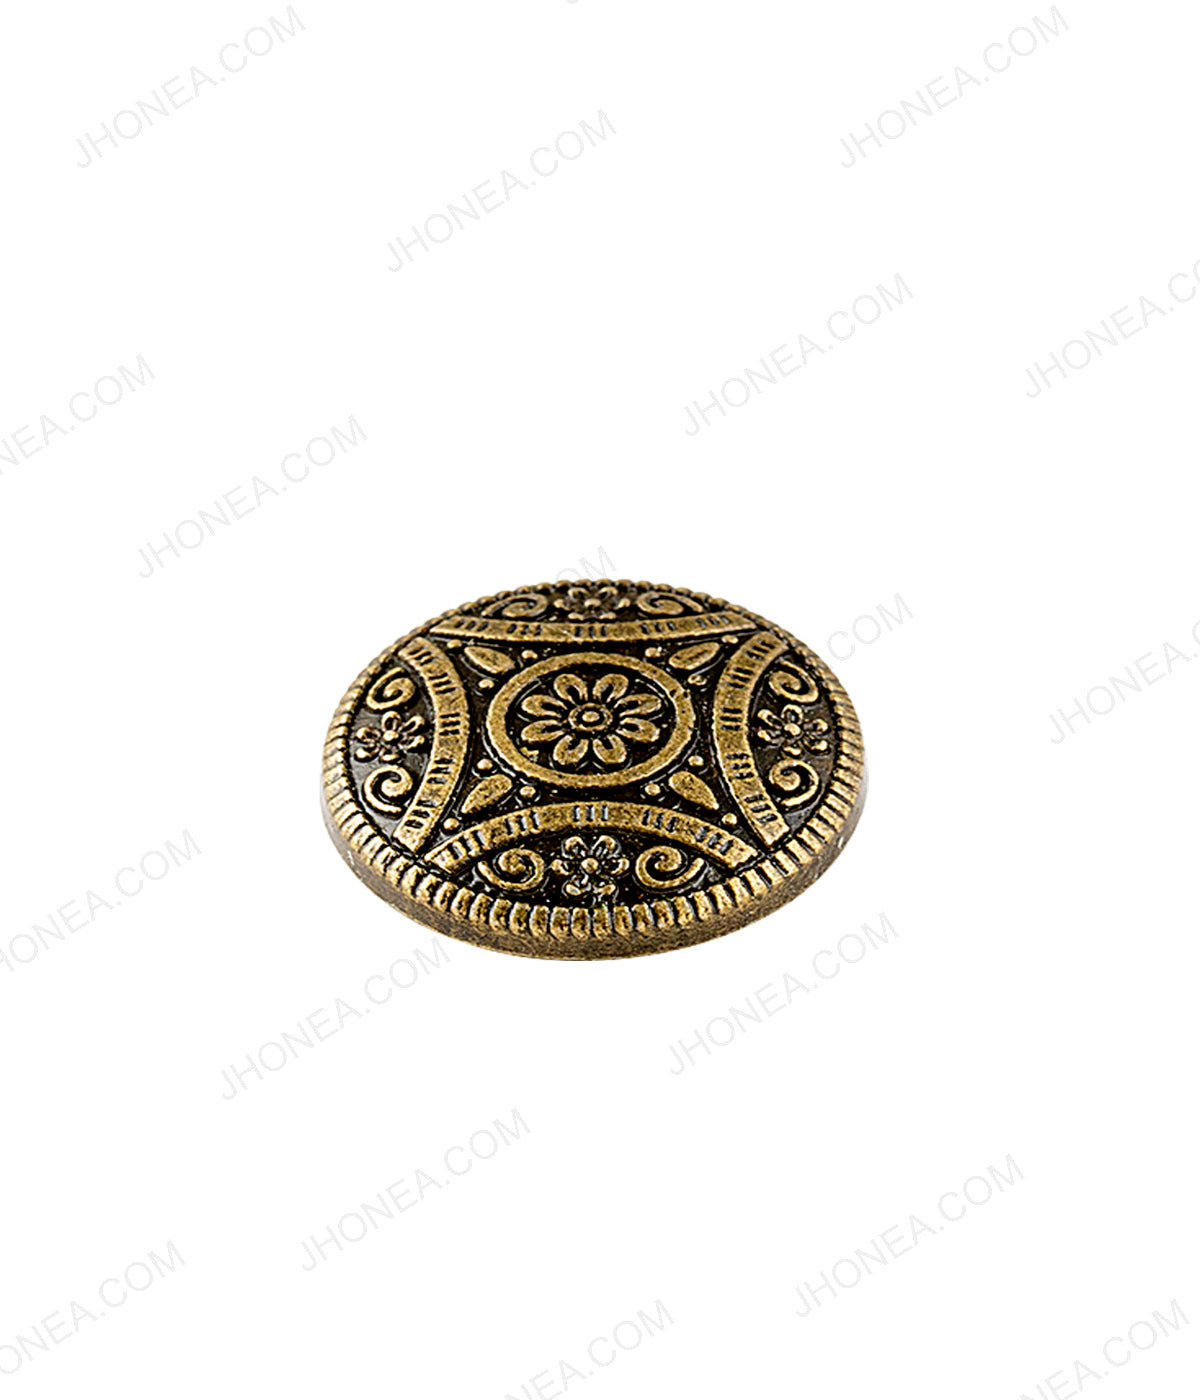 Antique Brass & Antique Gold Intricate Design Shank Buttons